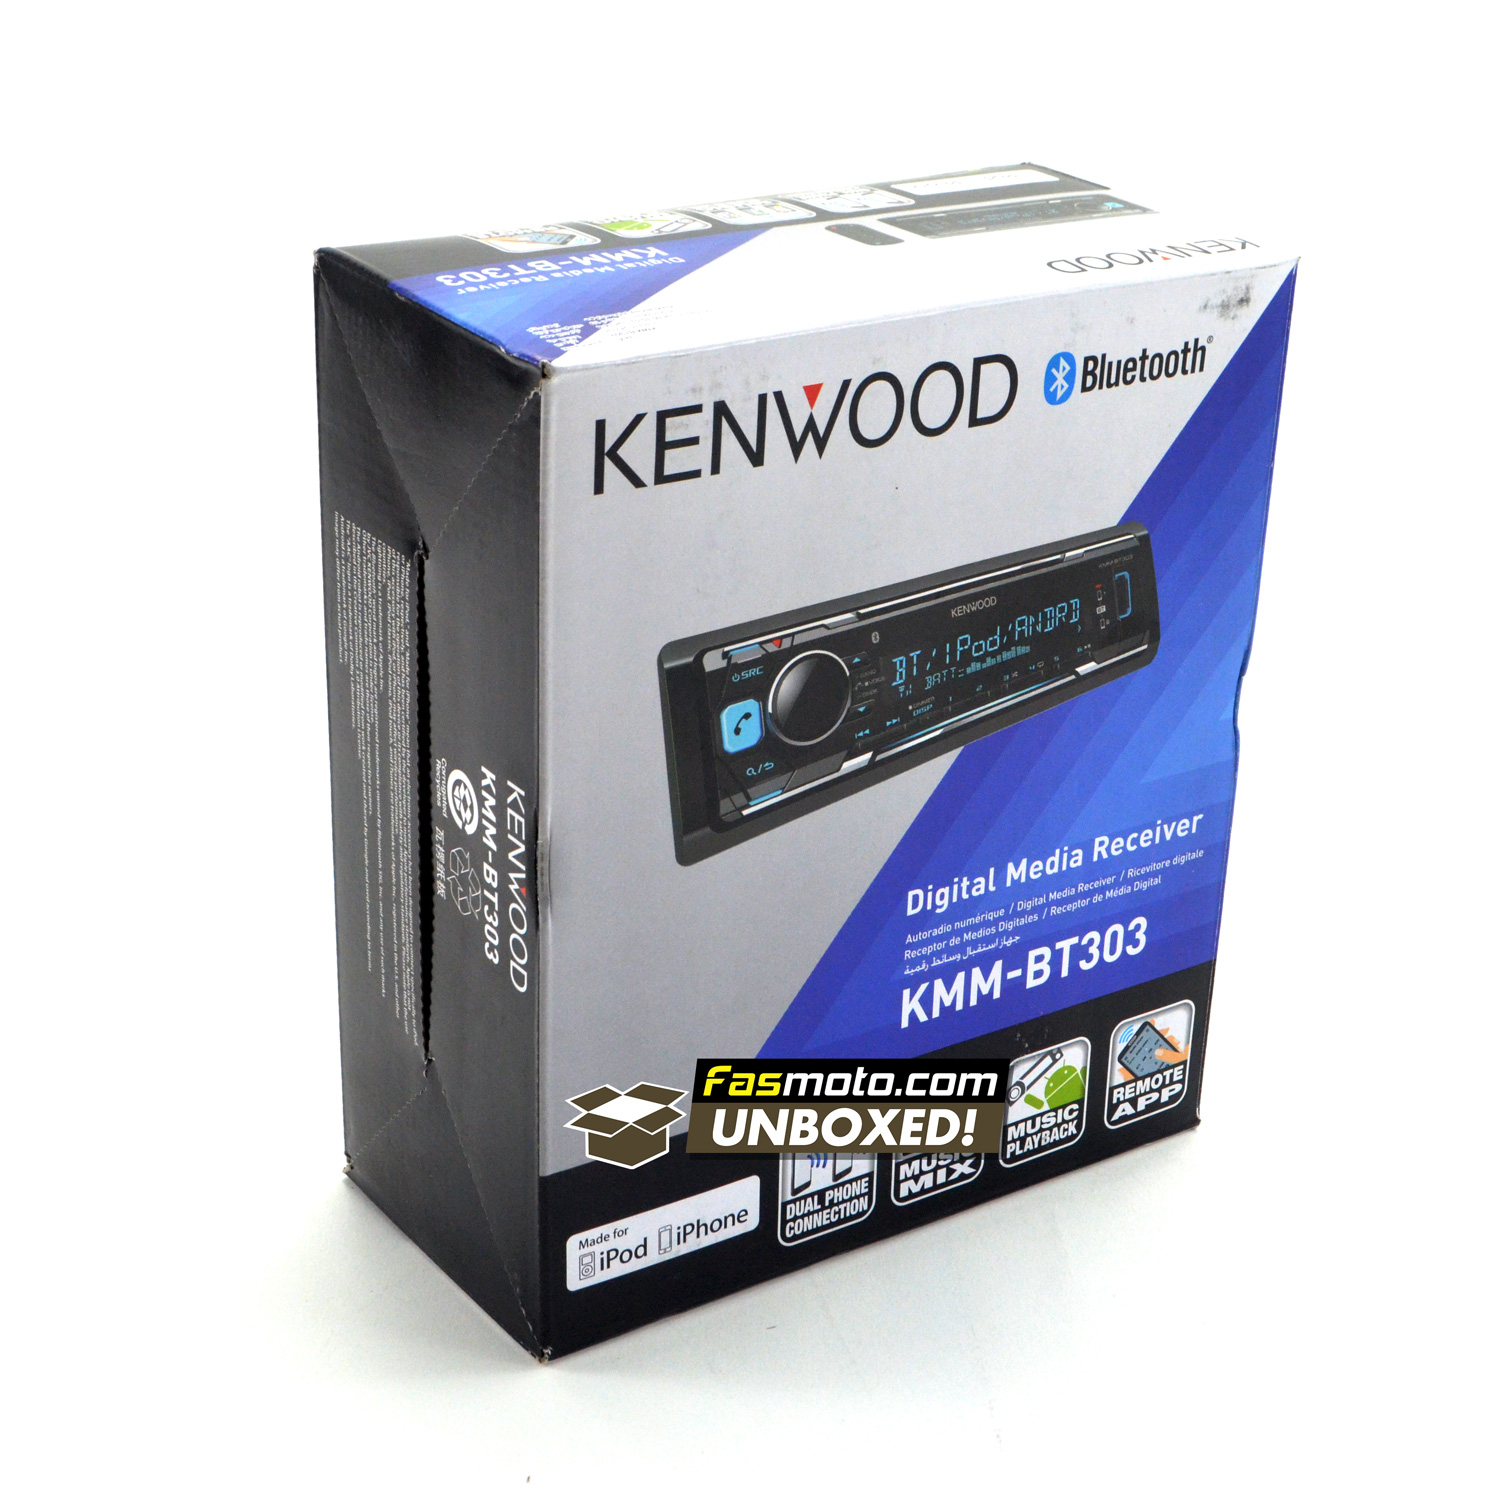 Fasmoto.com Unboxed - Kenwood KMM-BT303